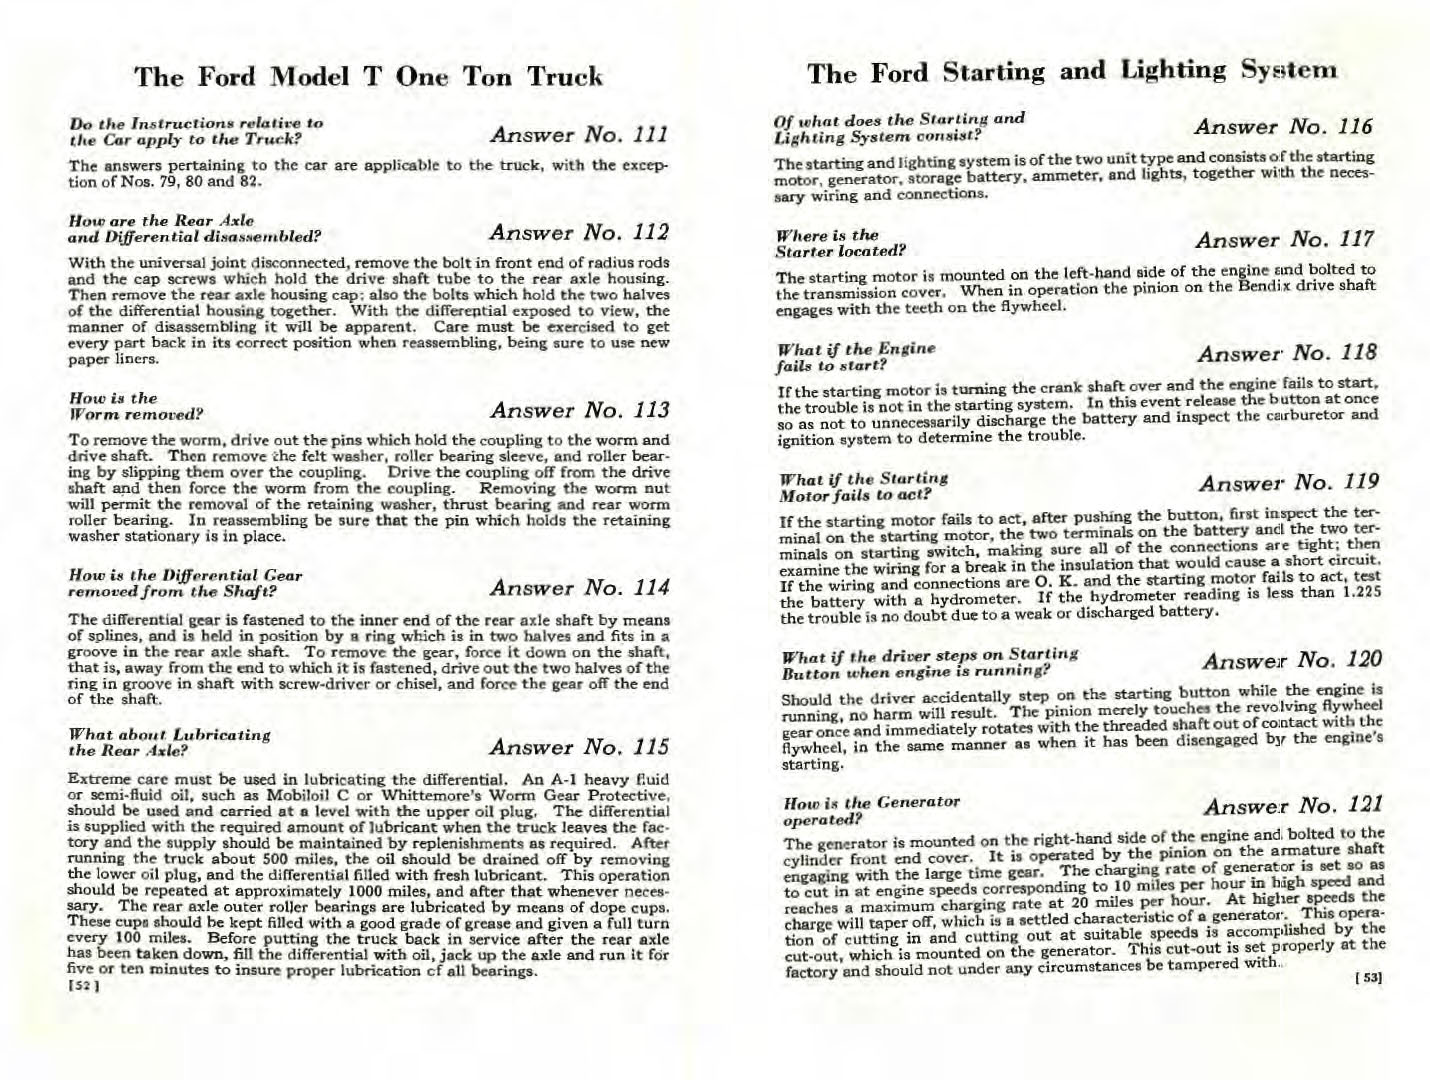 n_1922 Ford Manual-52-53.jpg